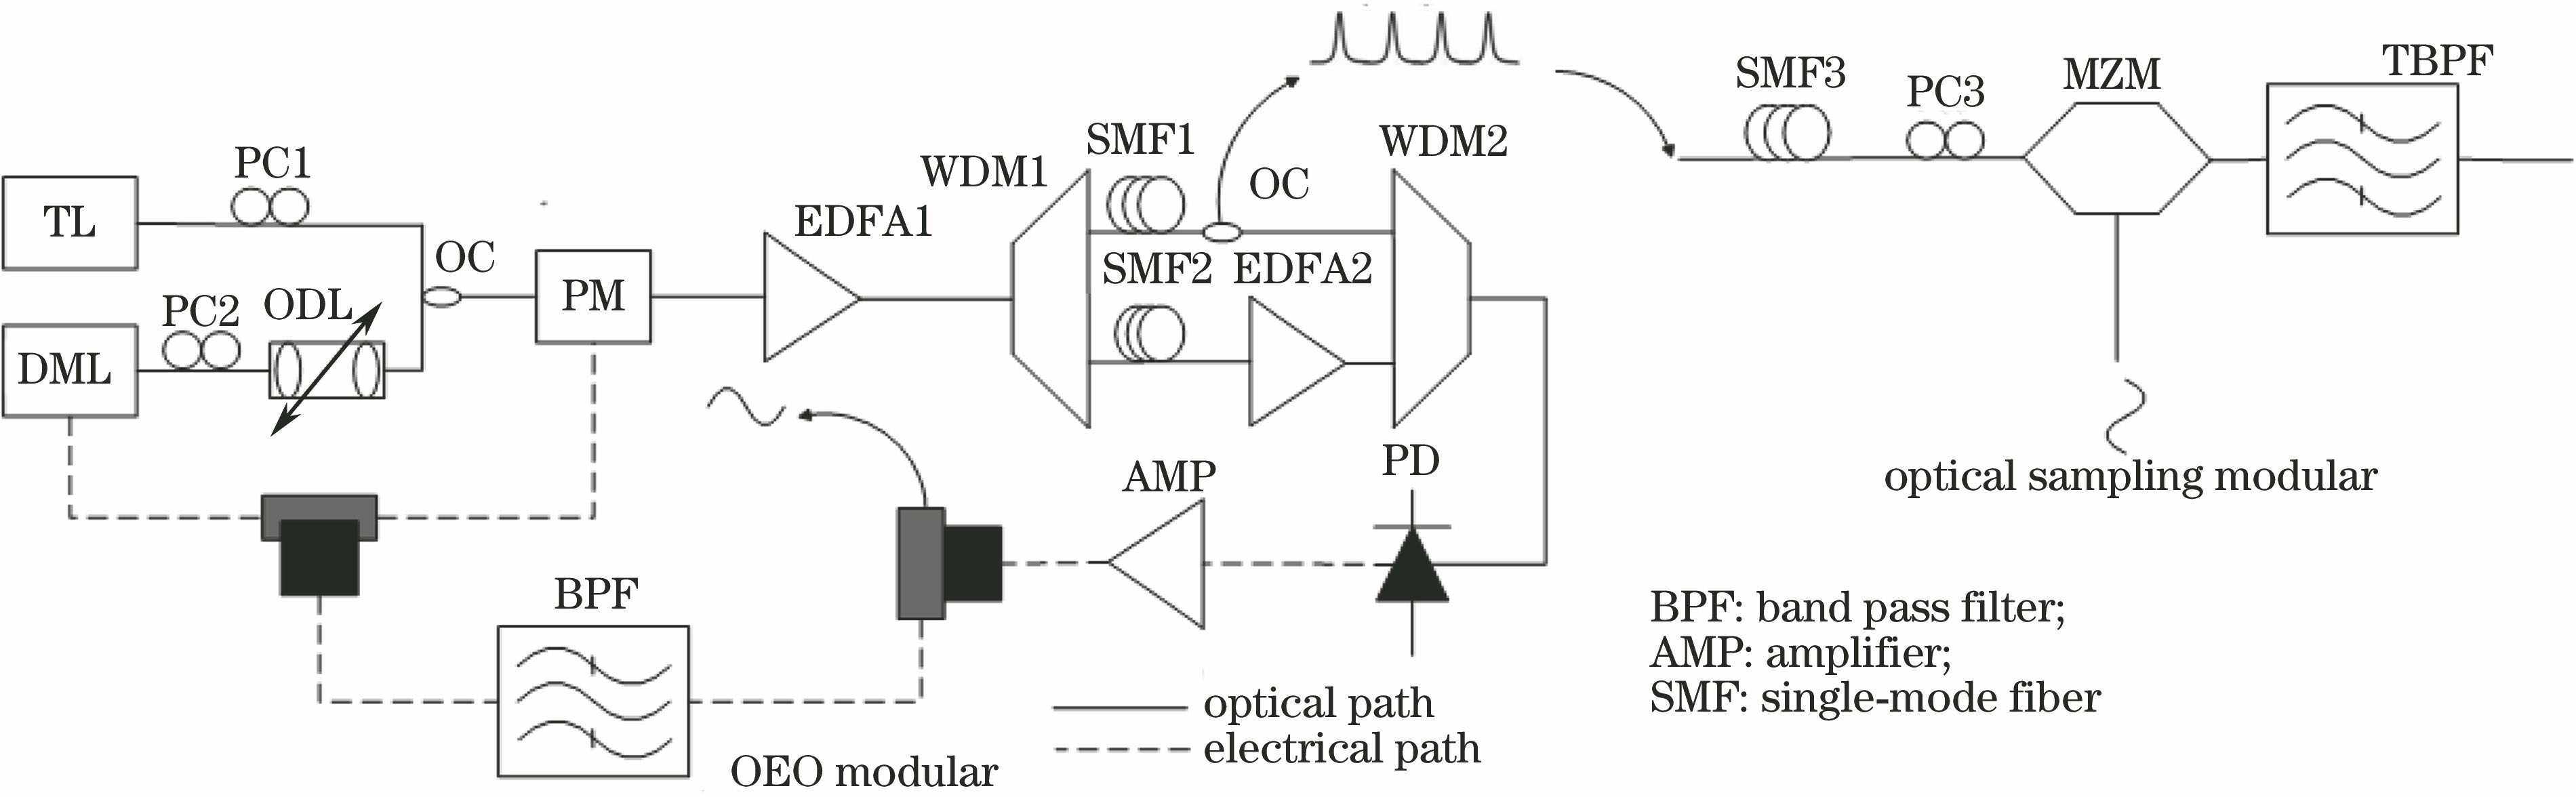 Optical sampling experiment based on dual-wavelength OEO